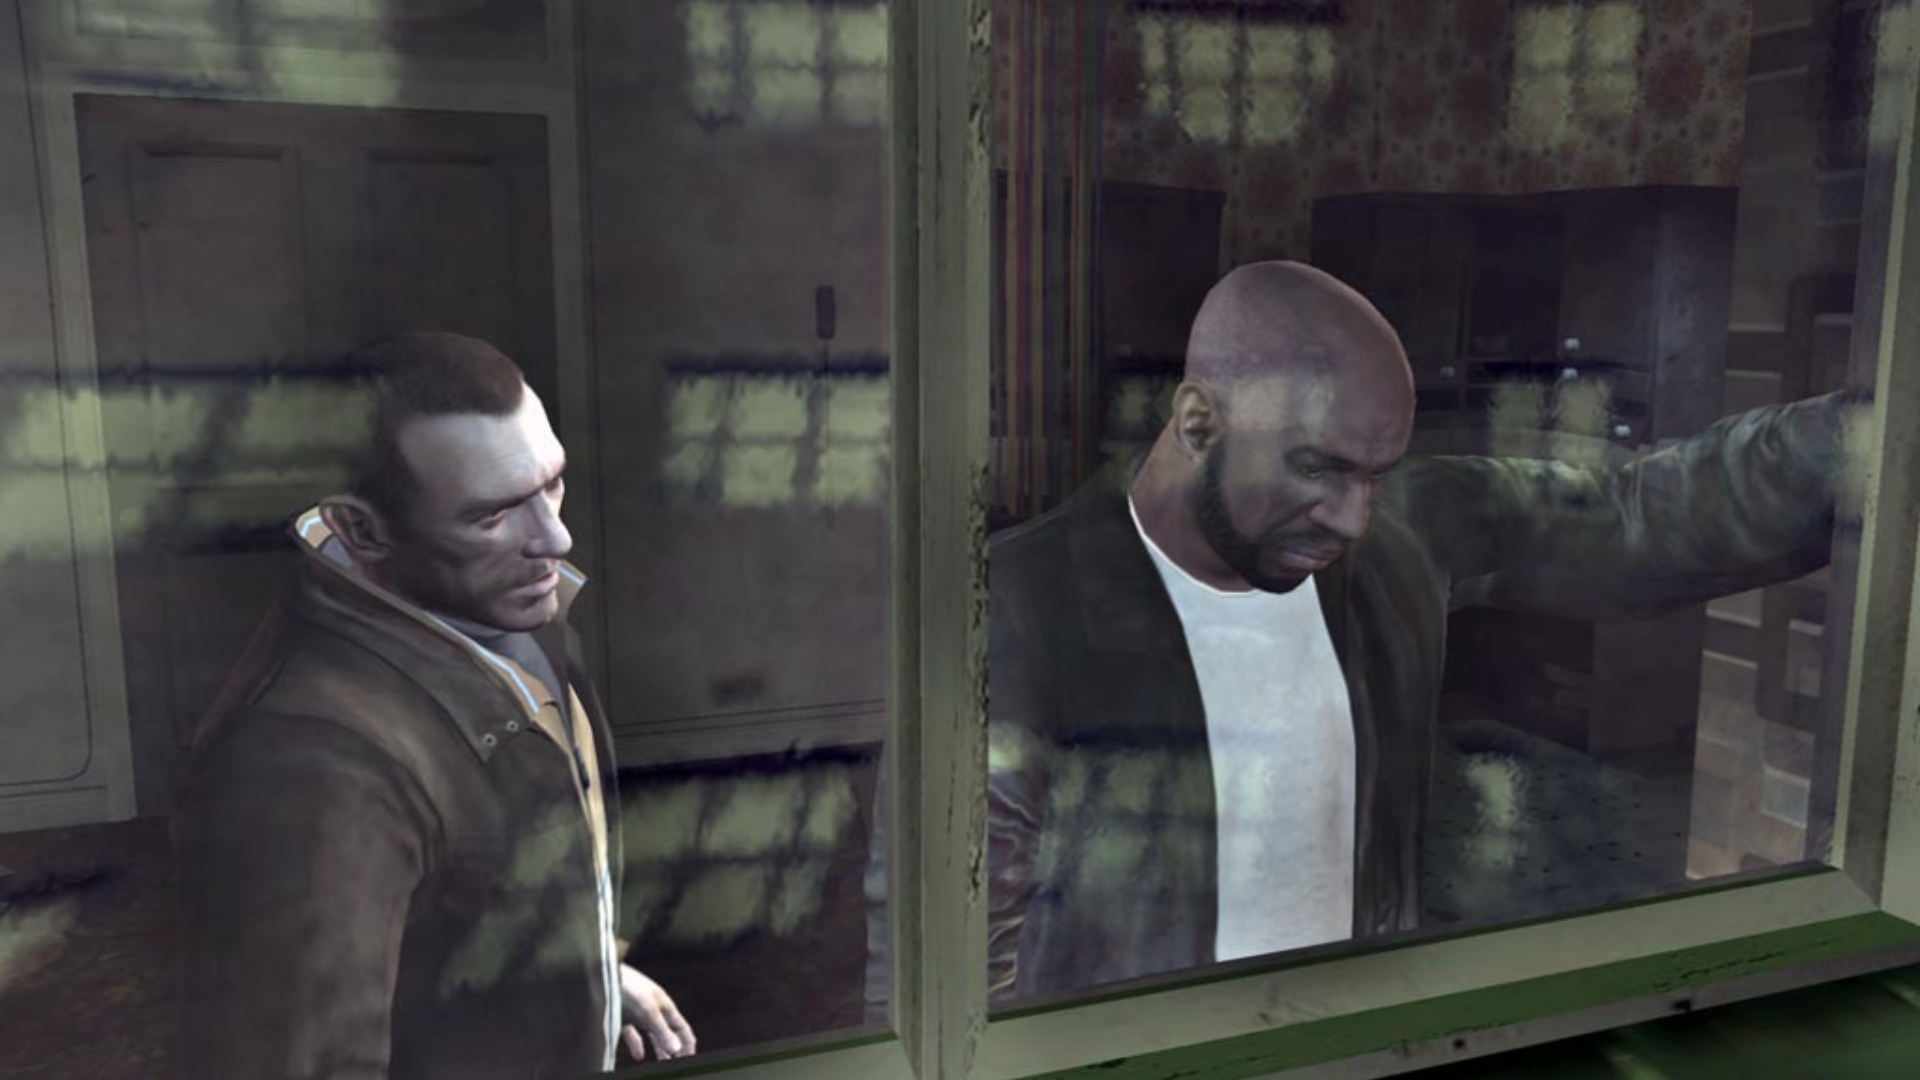 GTA 6 trailer: The protagonist of Grand Theft Auto 4, Niko Bellic